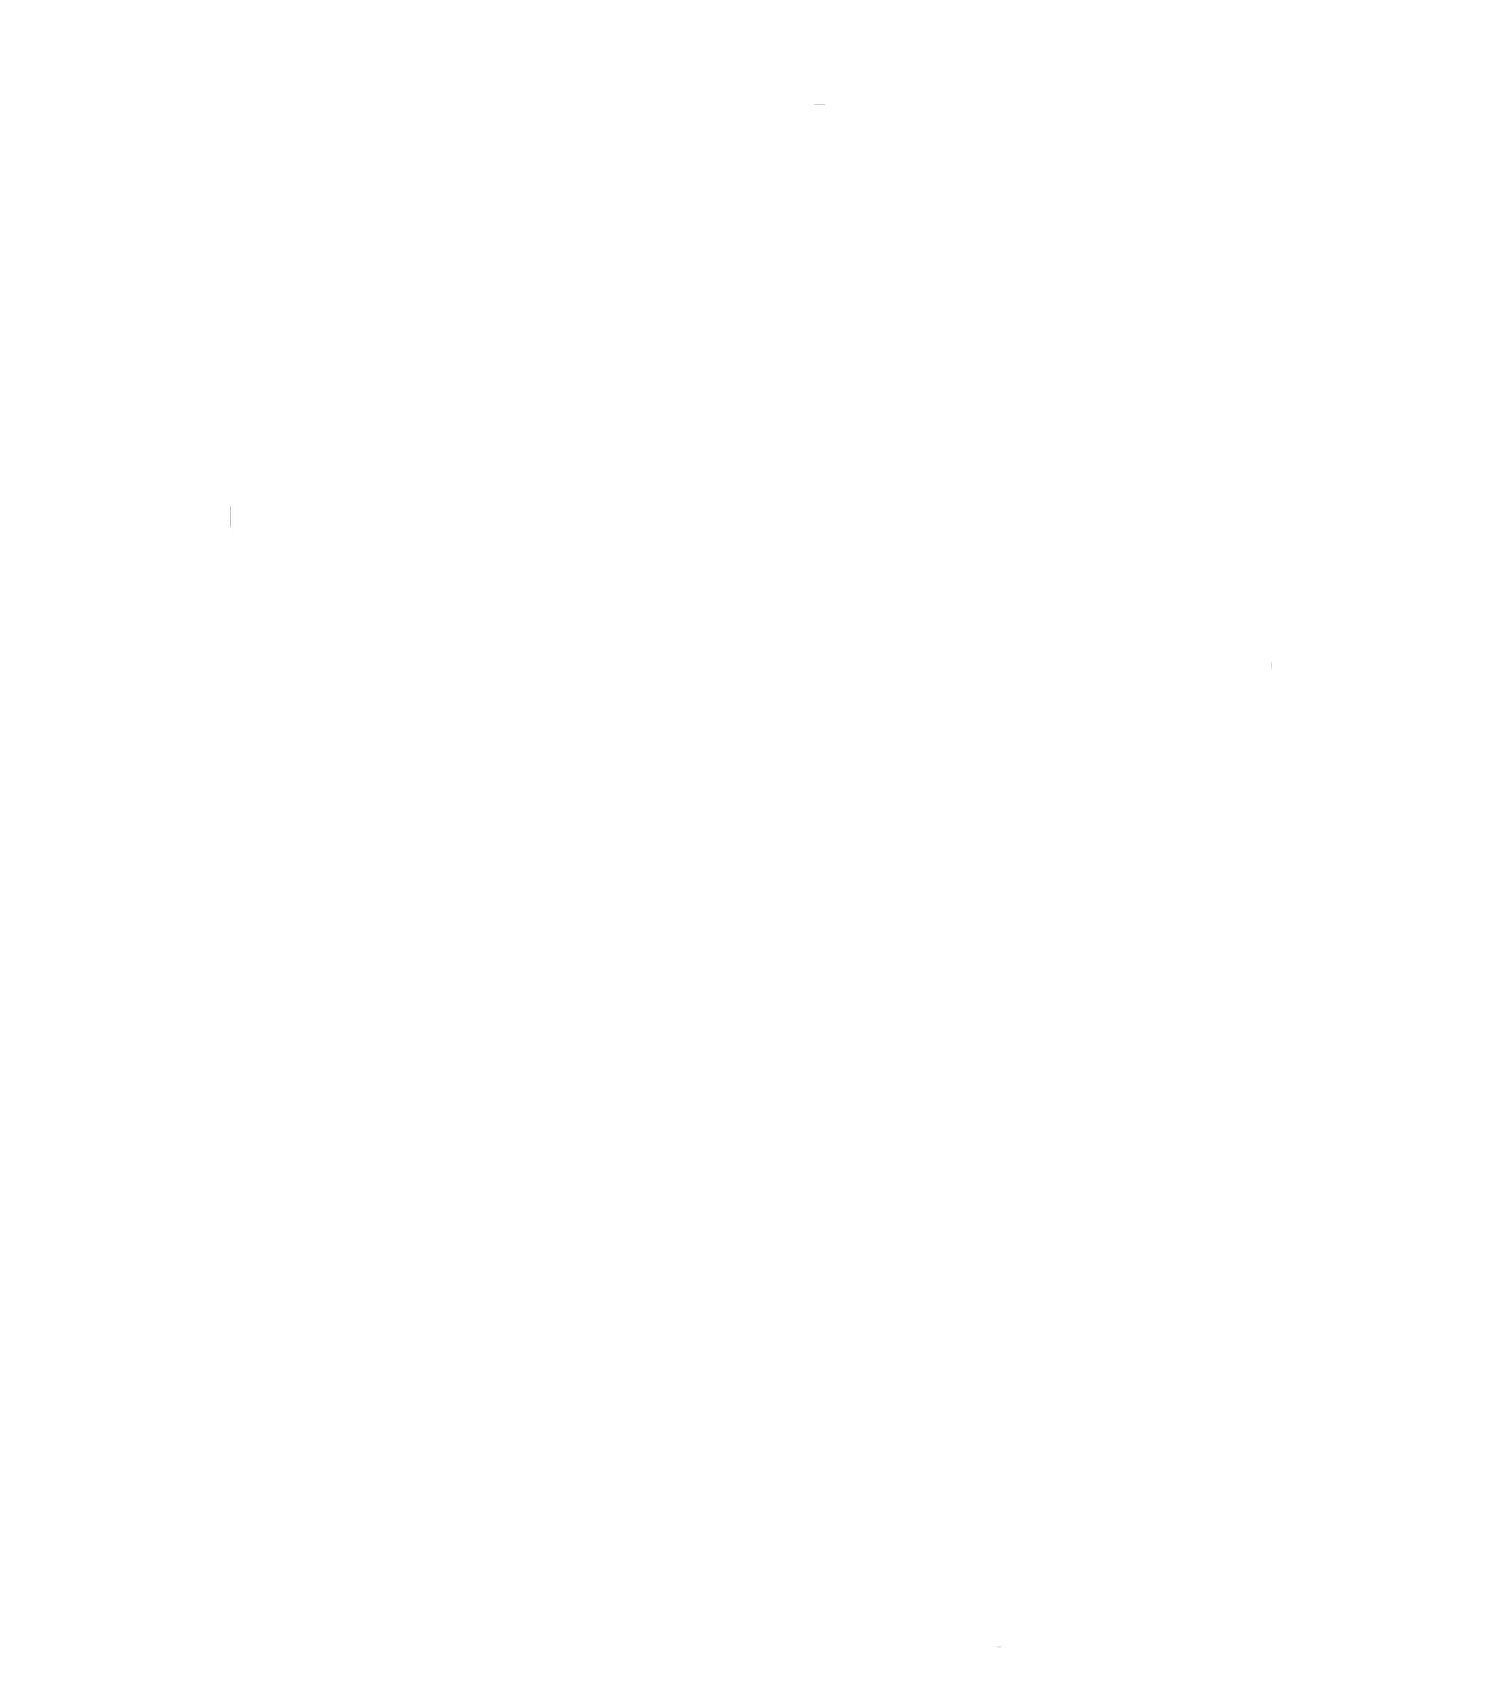 FlipADay